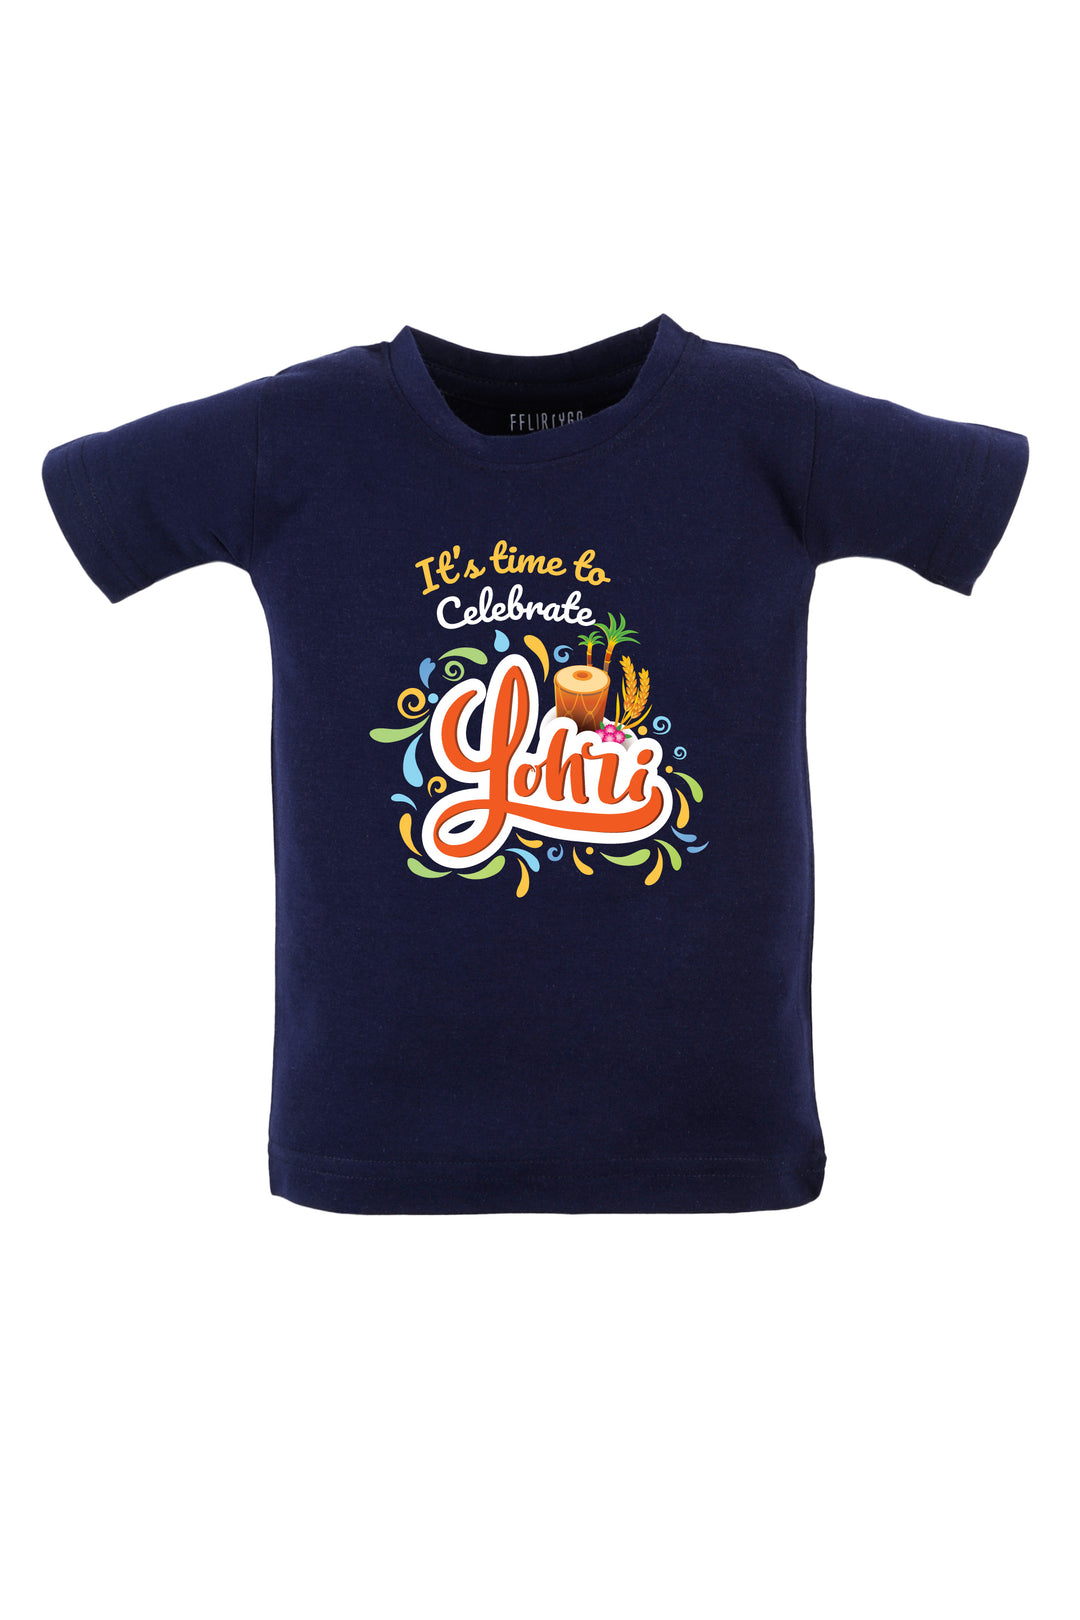 It's Time To Celebrate Lohri Kids T Shirt